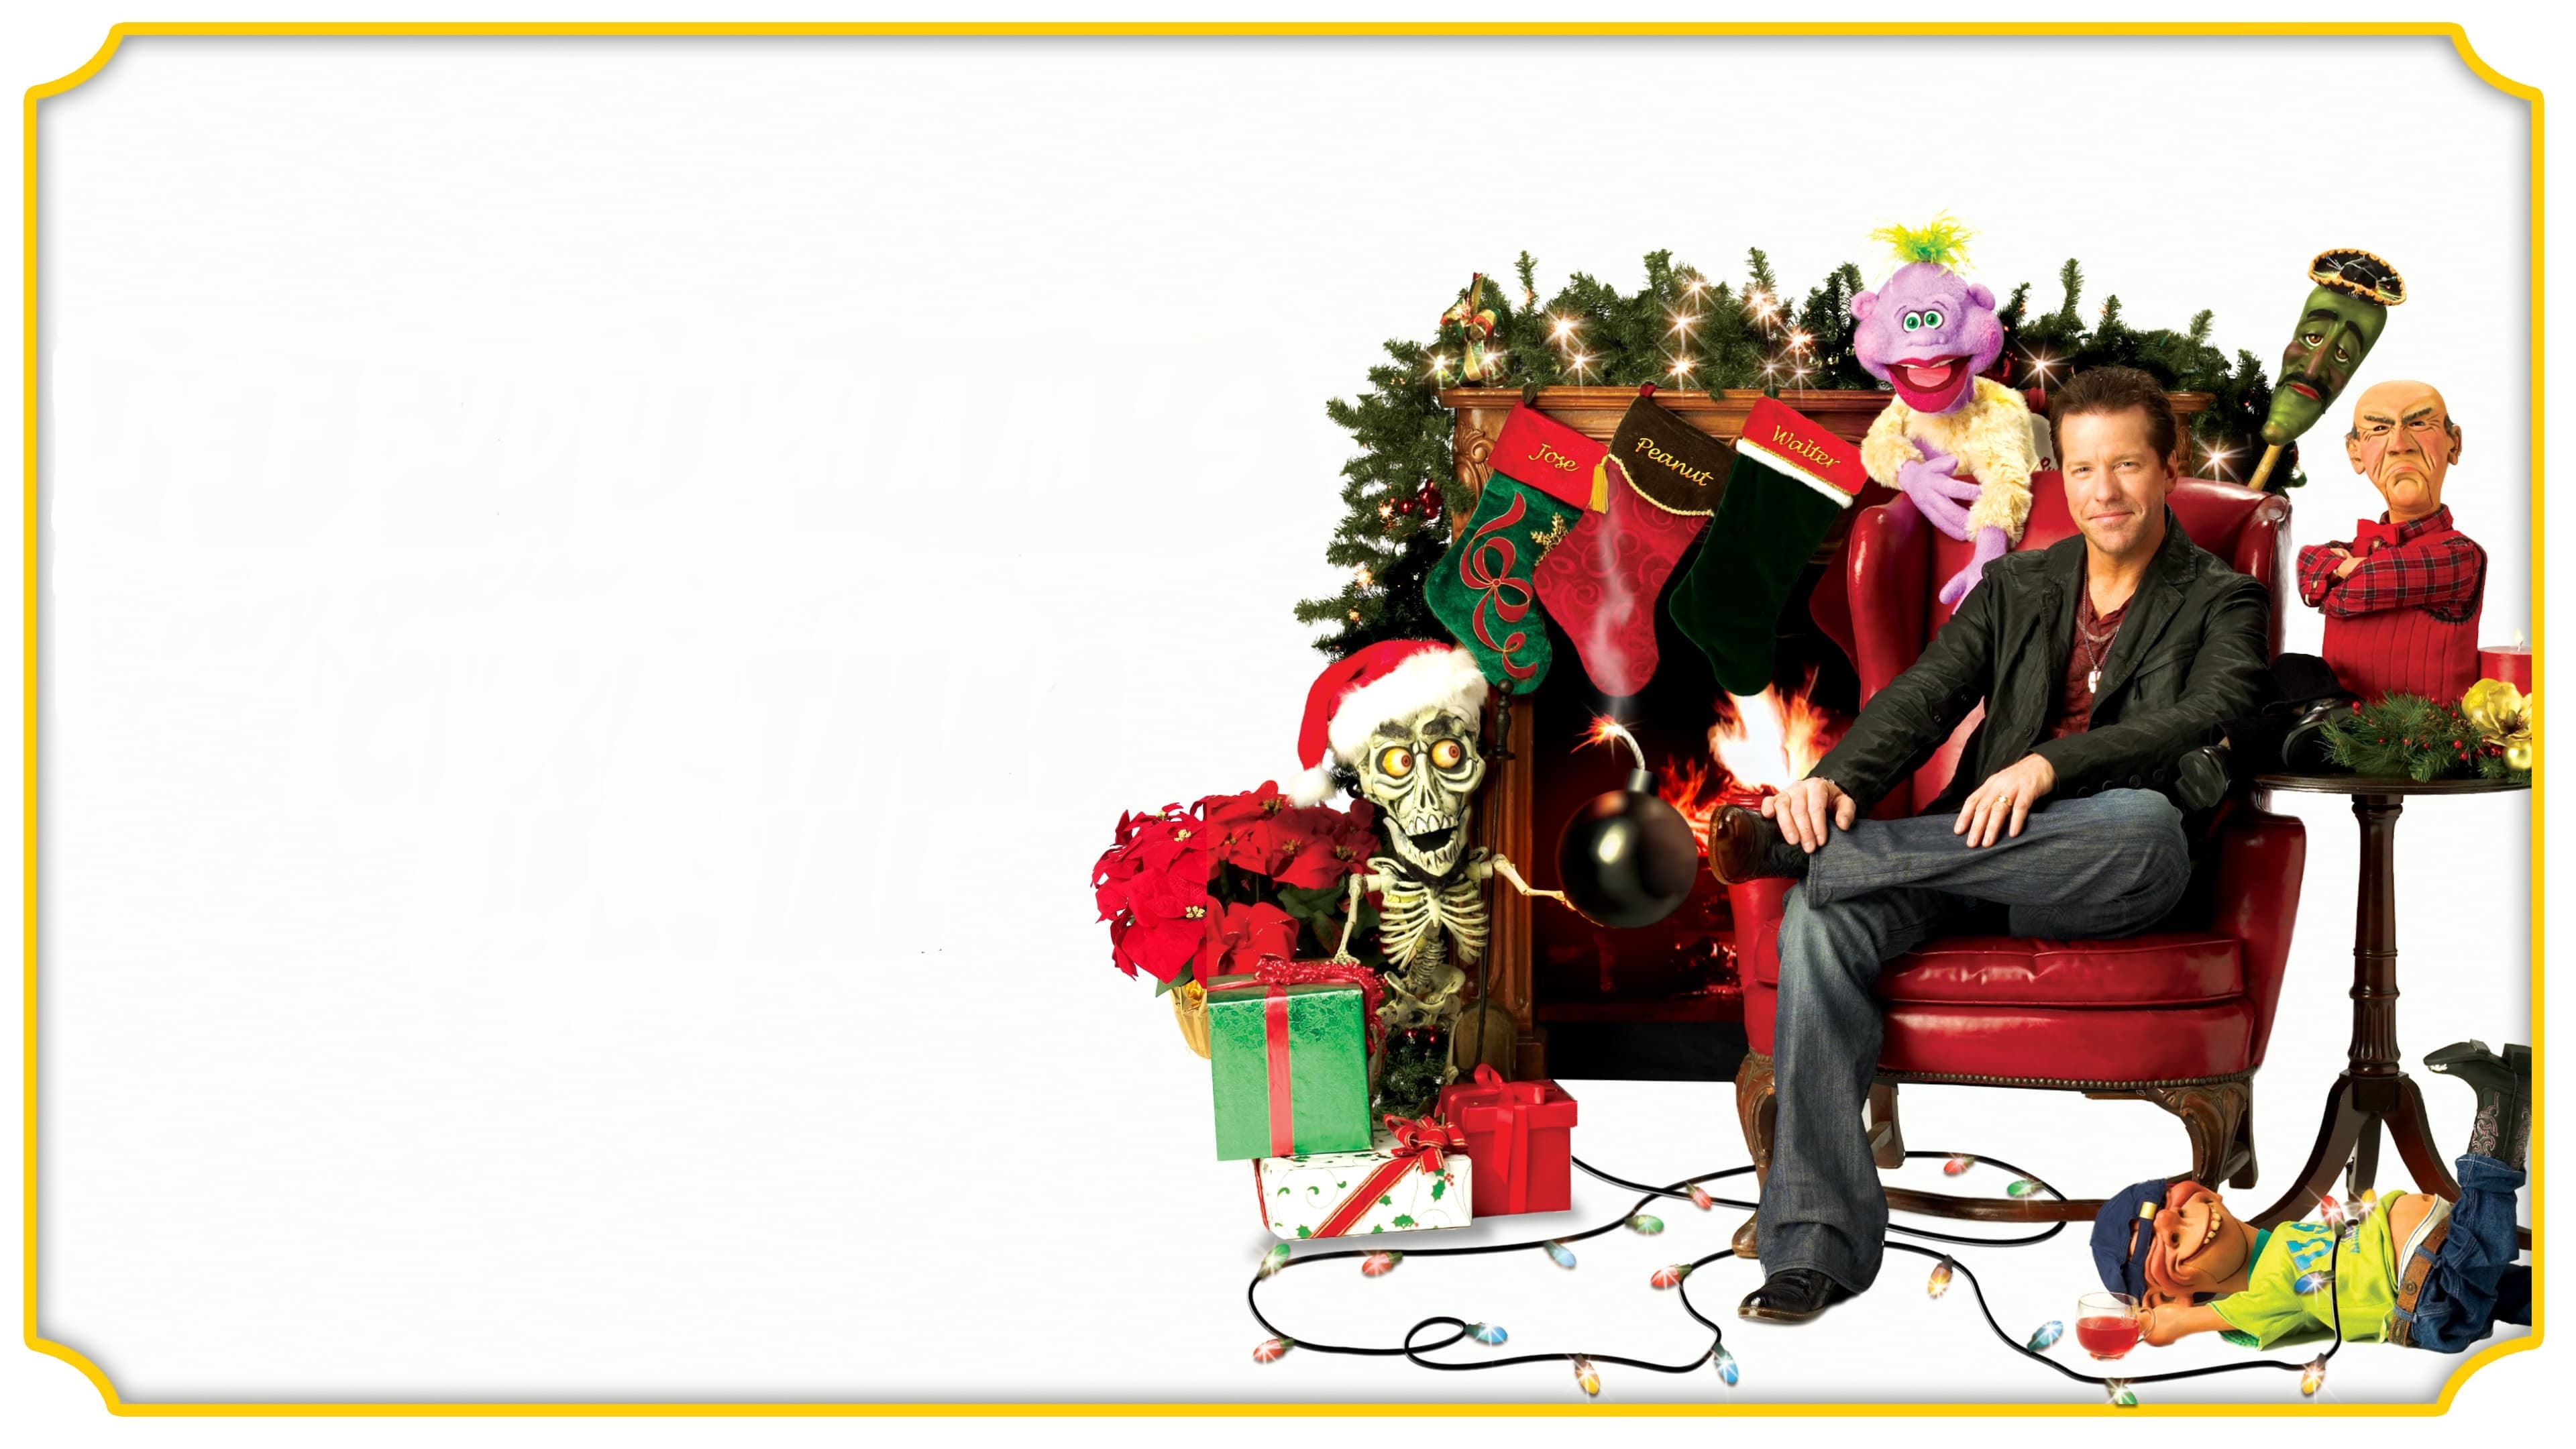 Jingle Bombs Weihnachten mit Jeff Dunham